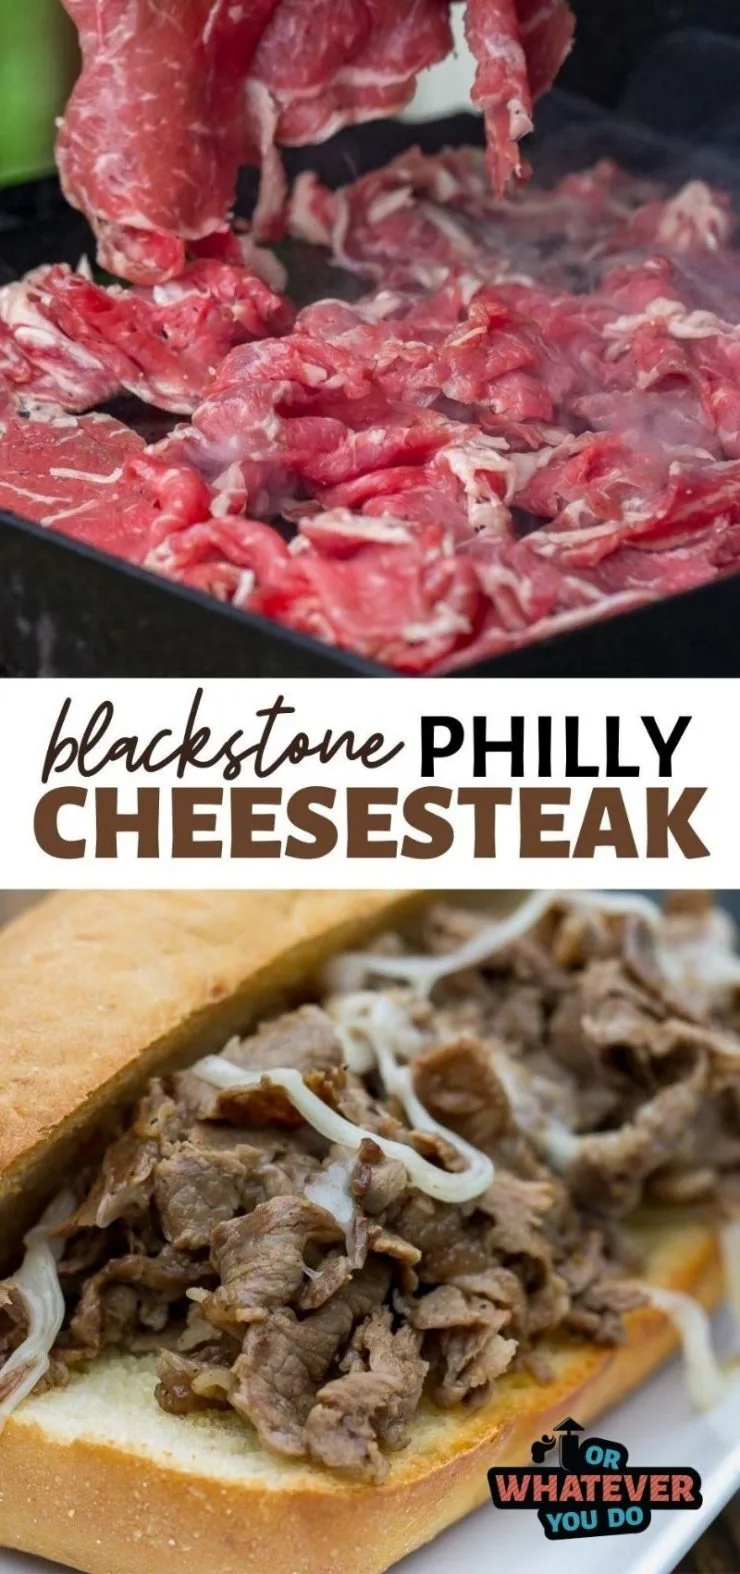 Blackstone Philly Cheesesteak